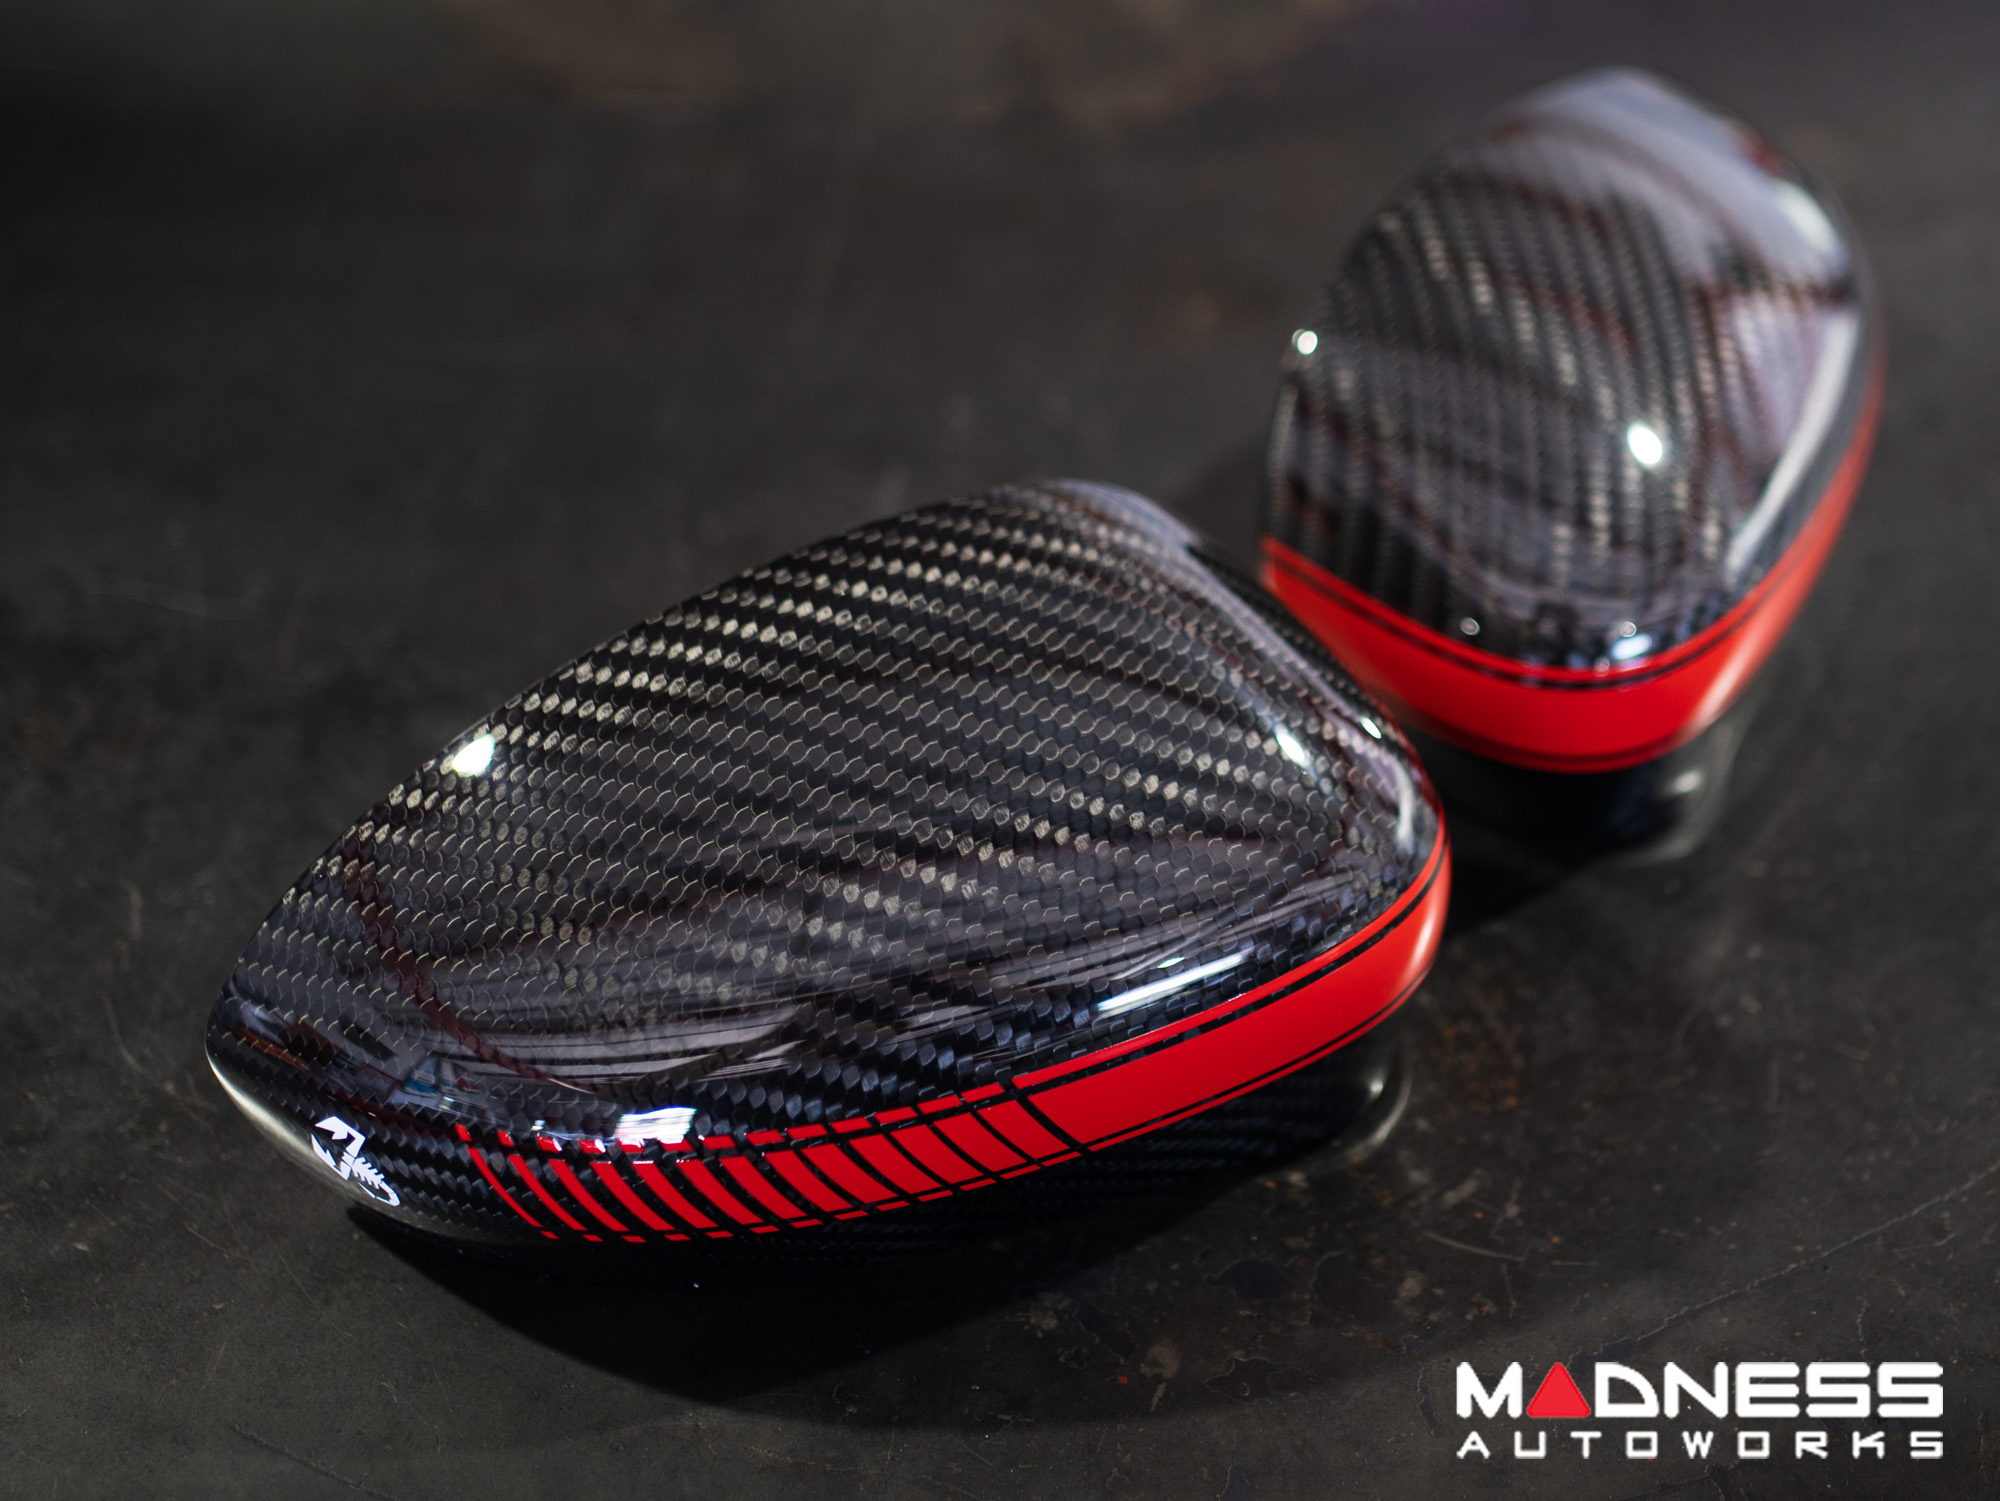 FIAT 500 Mirror Covers in Carbon Fiber - Italian Racing Stripe